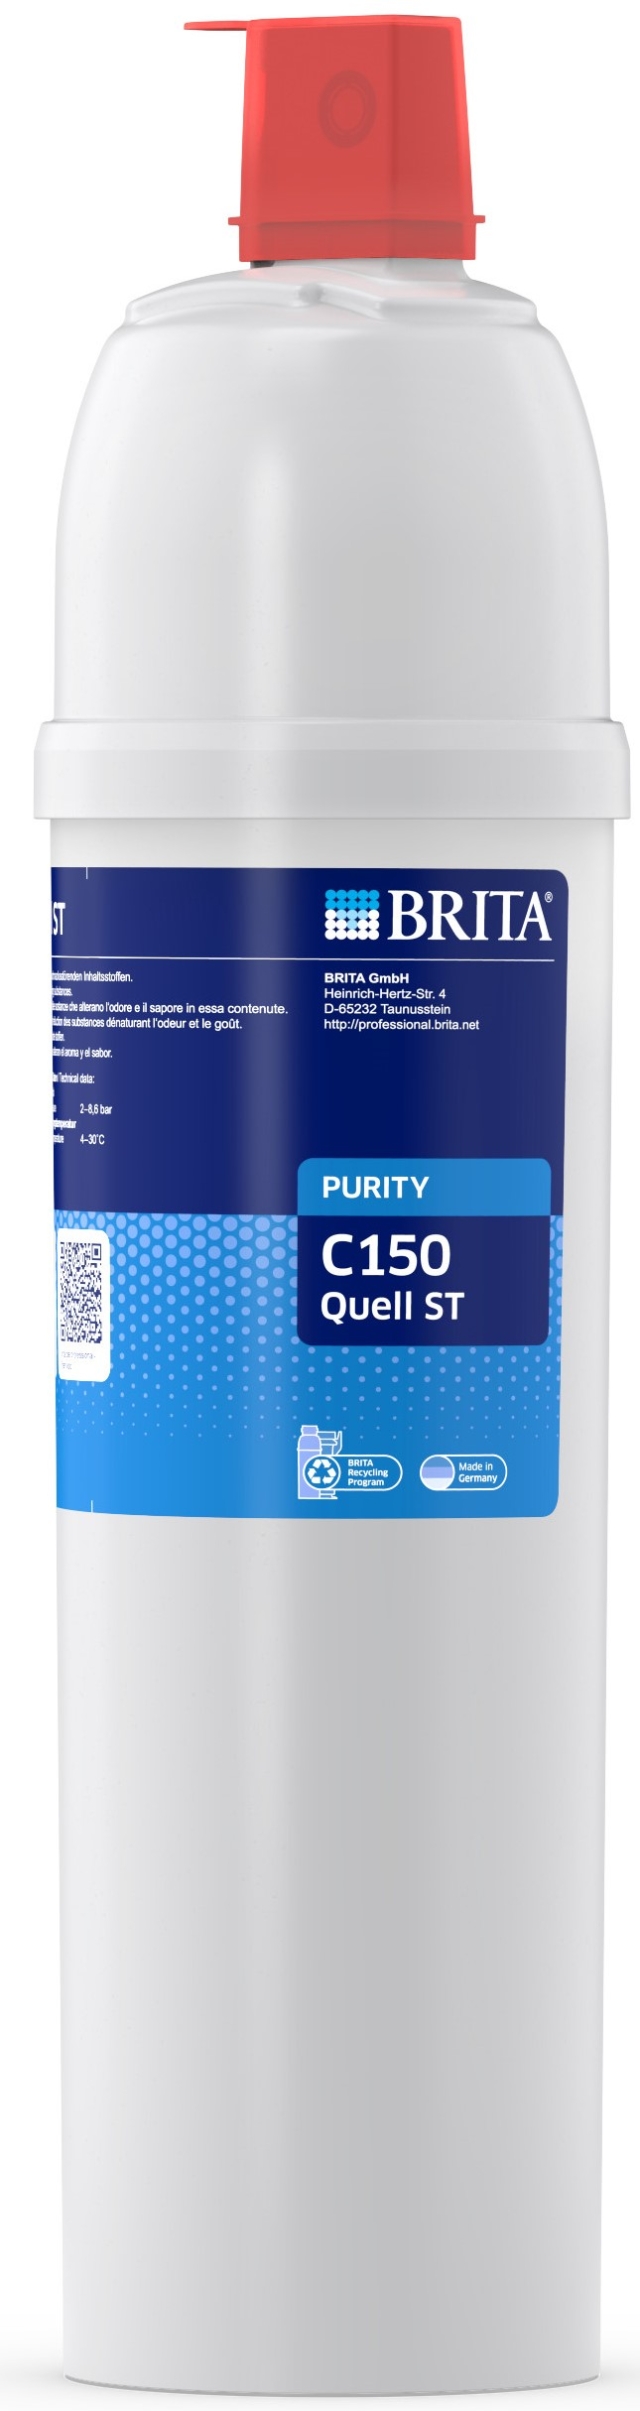 Brita water filter C150 Quell